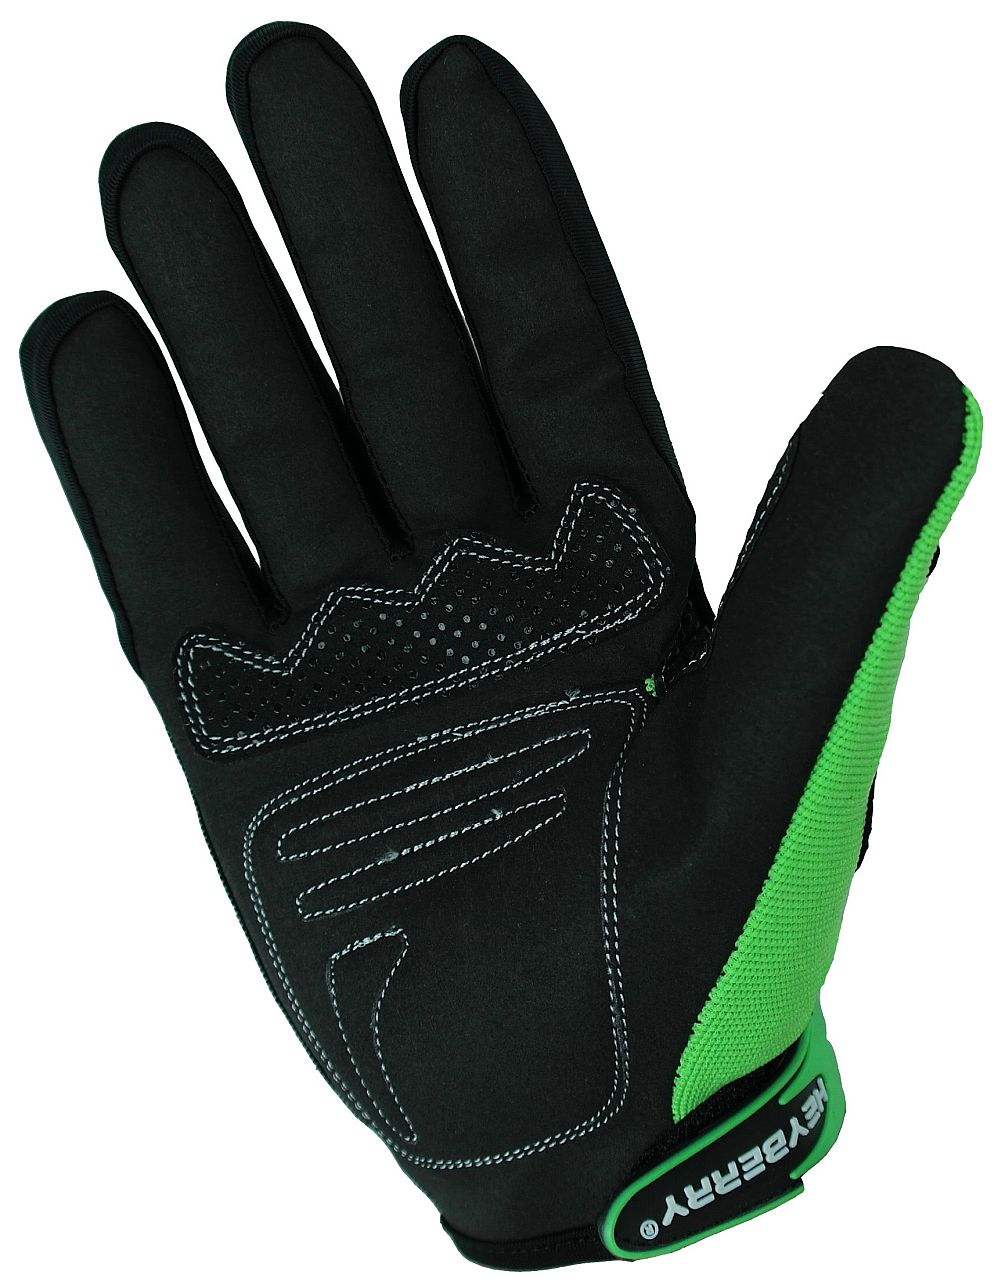 Heyberry Motocross MTB MX Handschuhe schwarz grün Gr. S - XXL